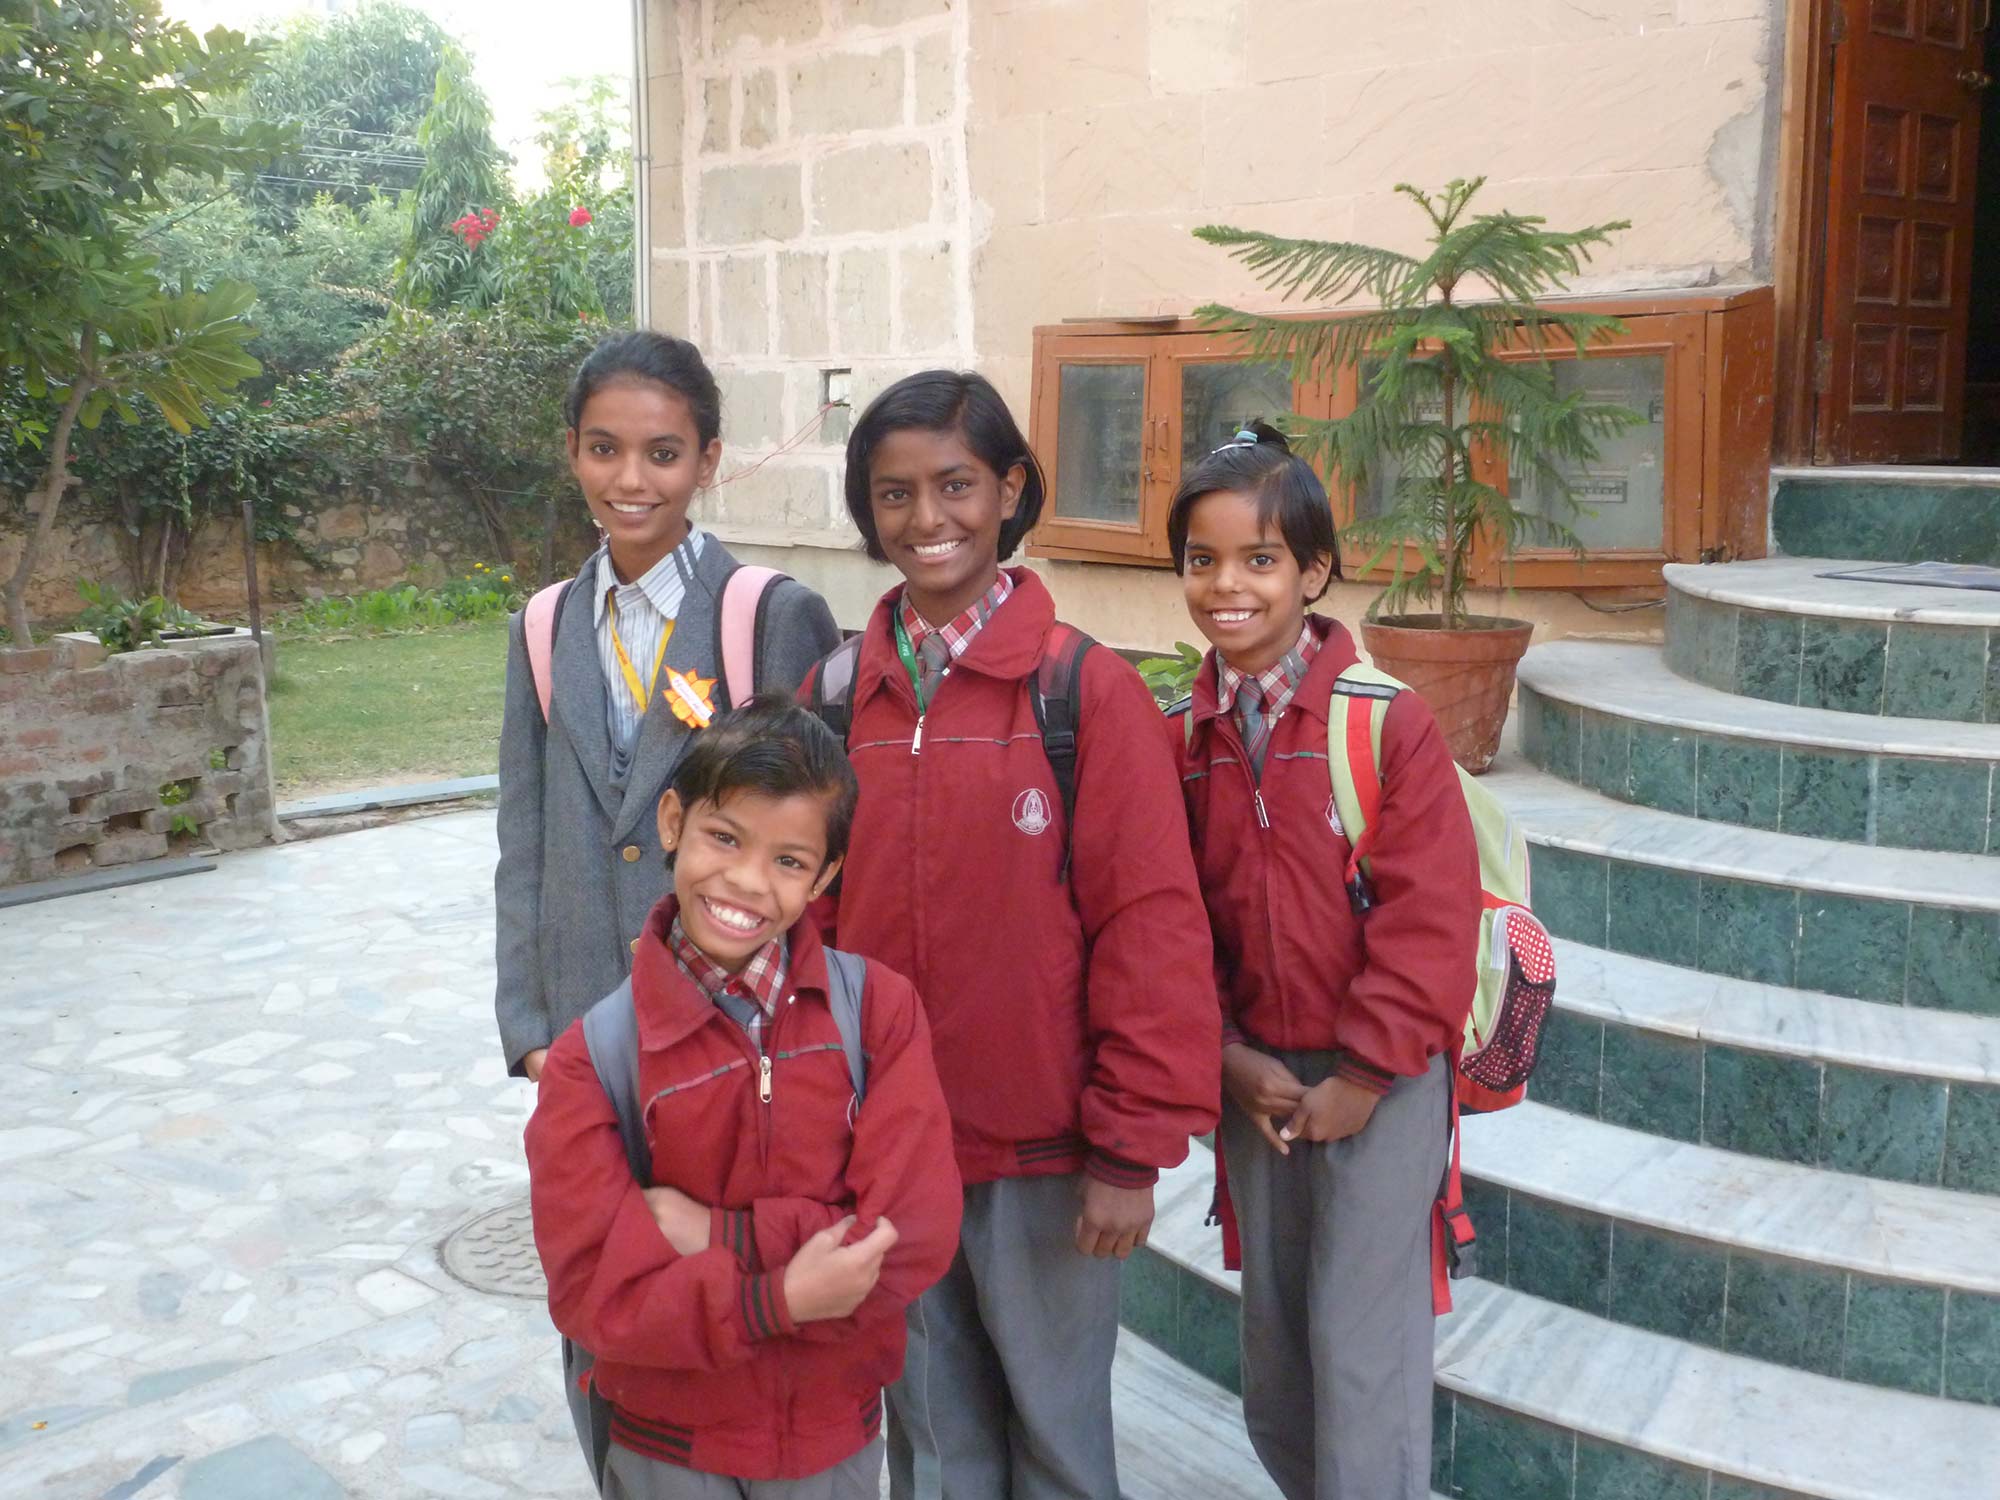 https://www.canserve.ca/wp-content/uploads/2015/10/Girls-ready-for-school-2013.jpg